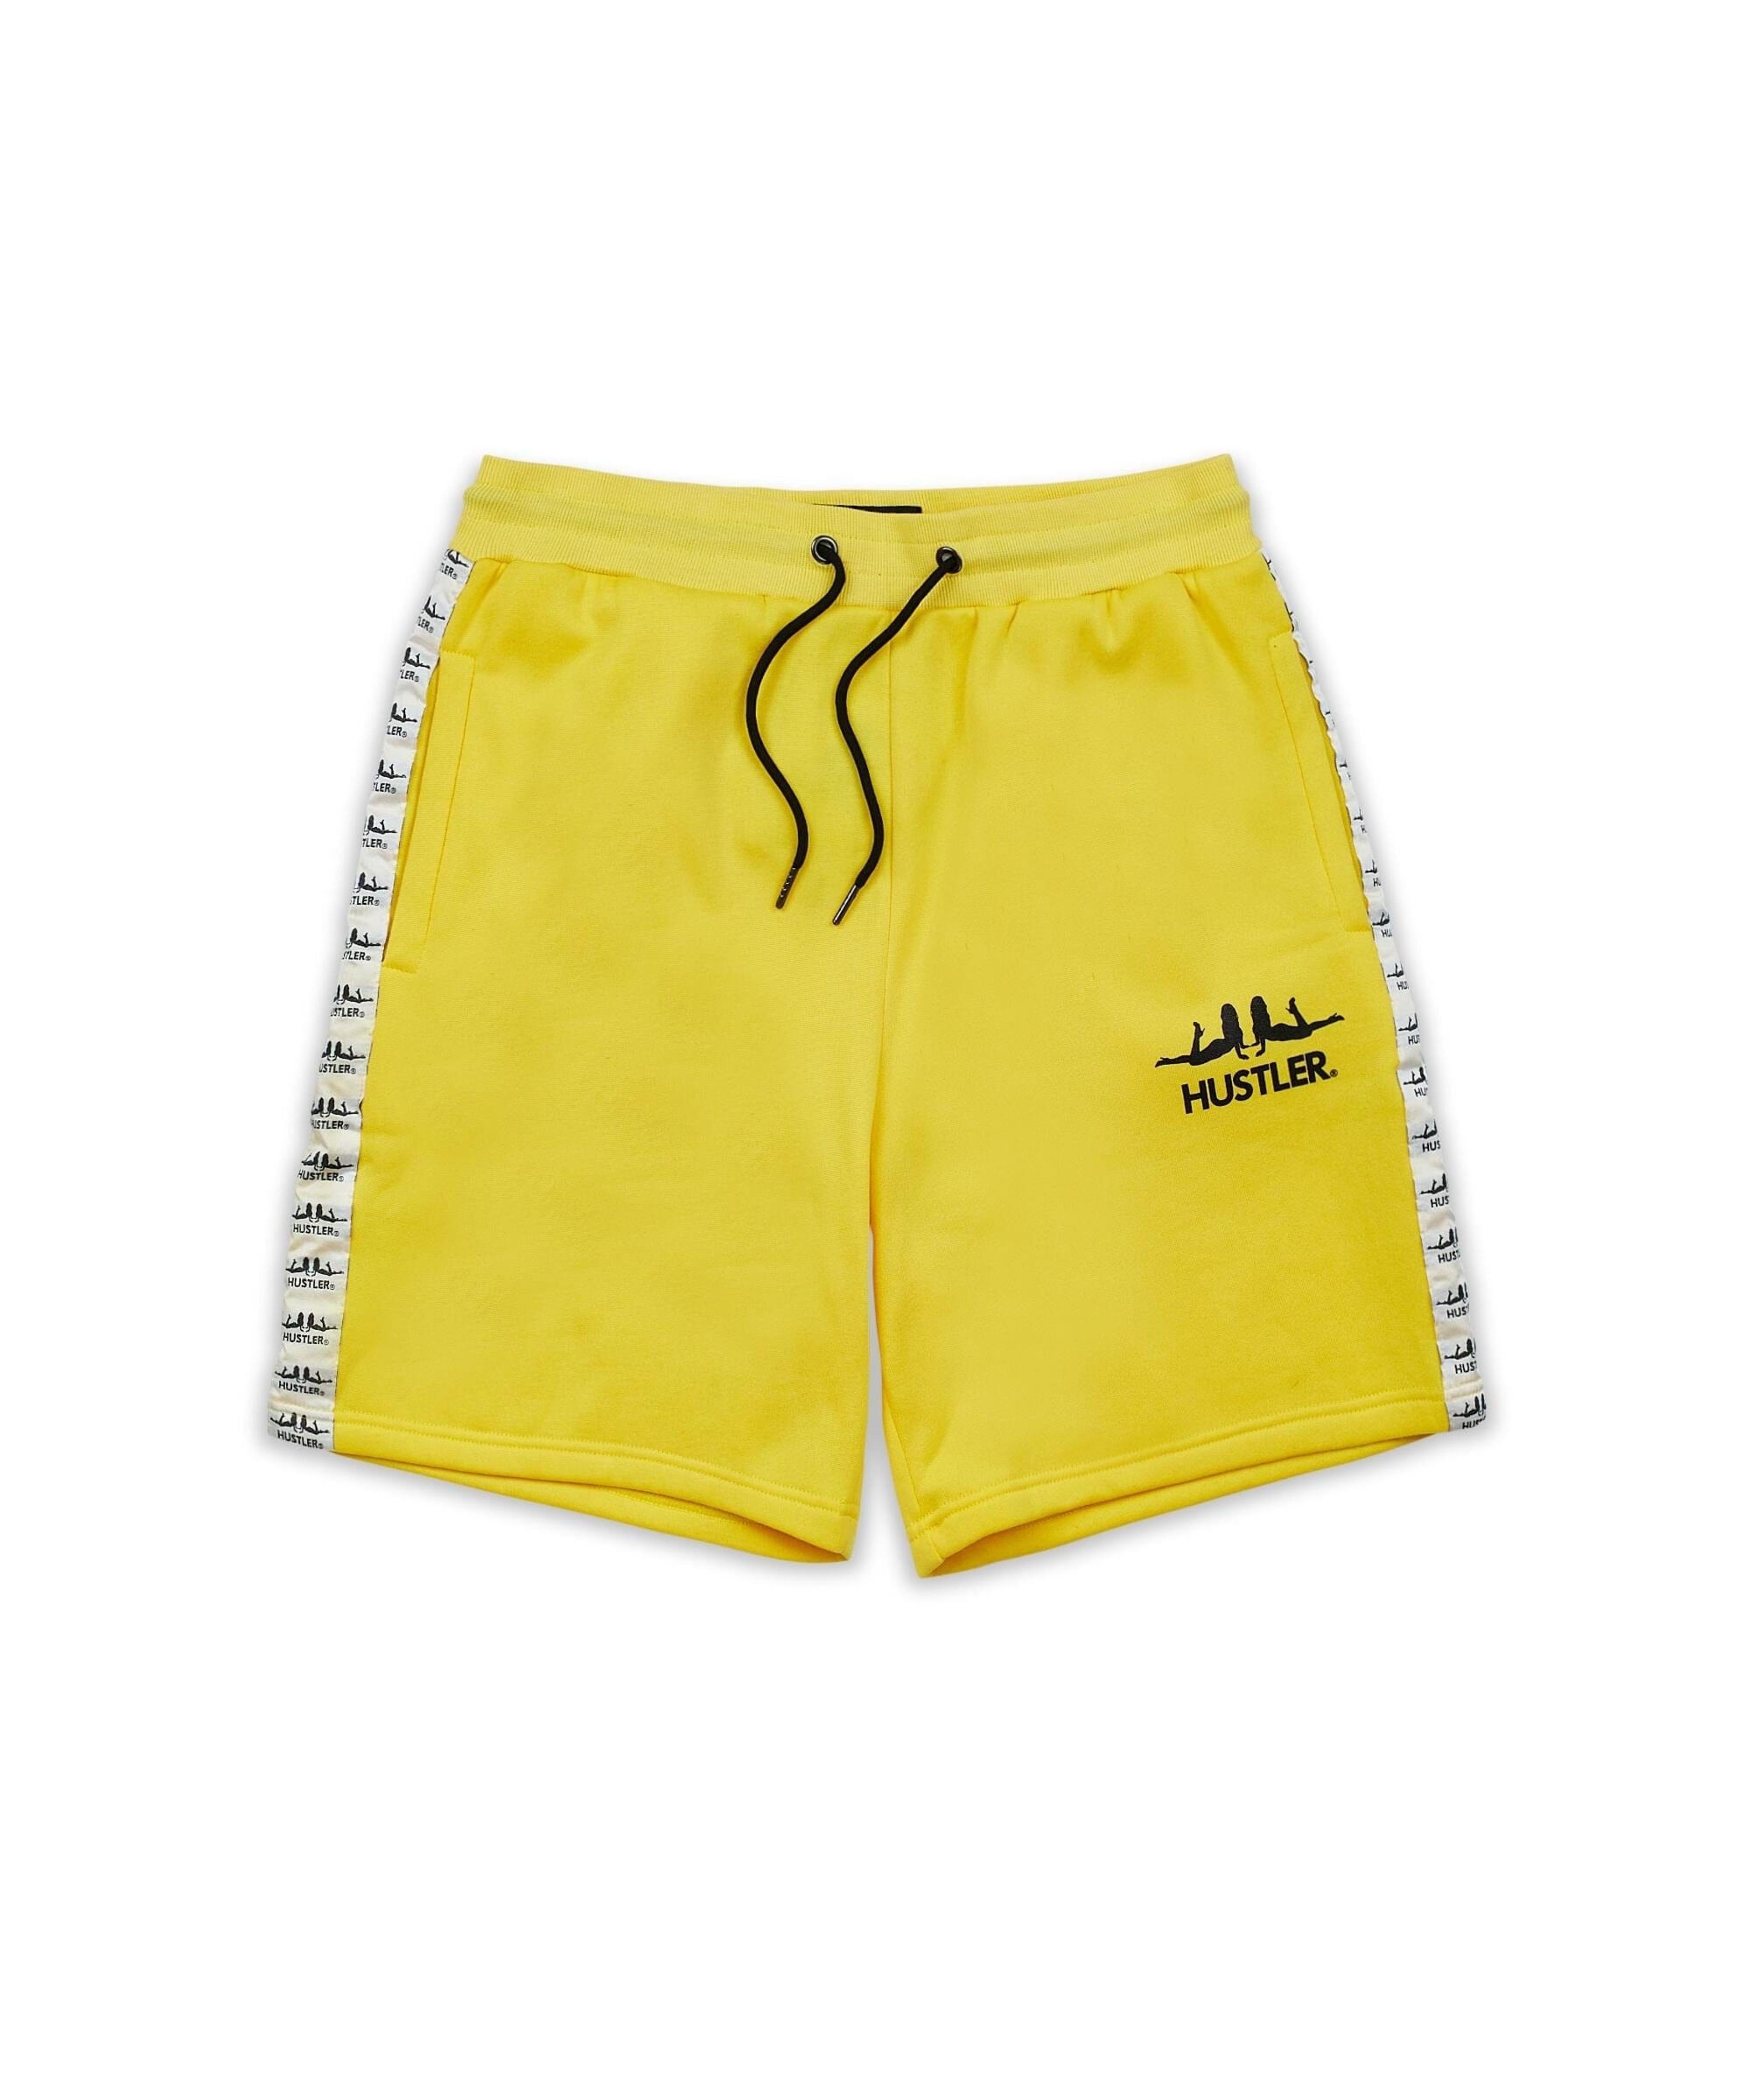 Alternate View 1 of Hustler Side Stripe Shorts - Yellow